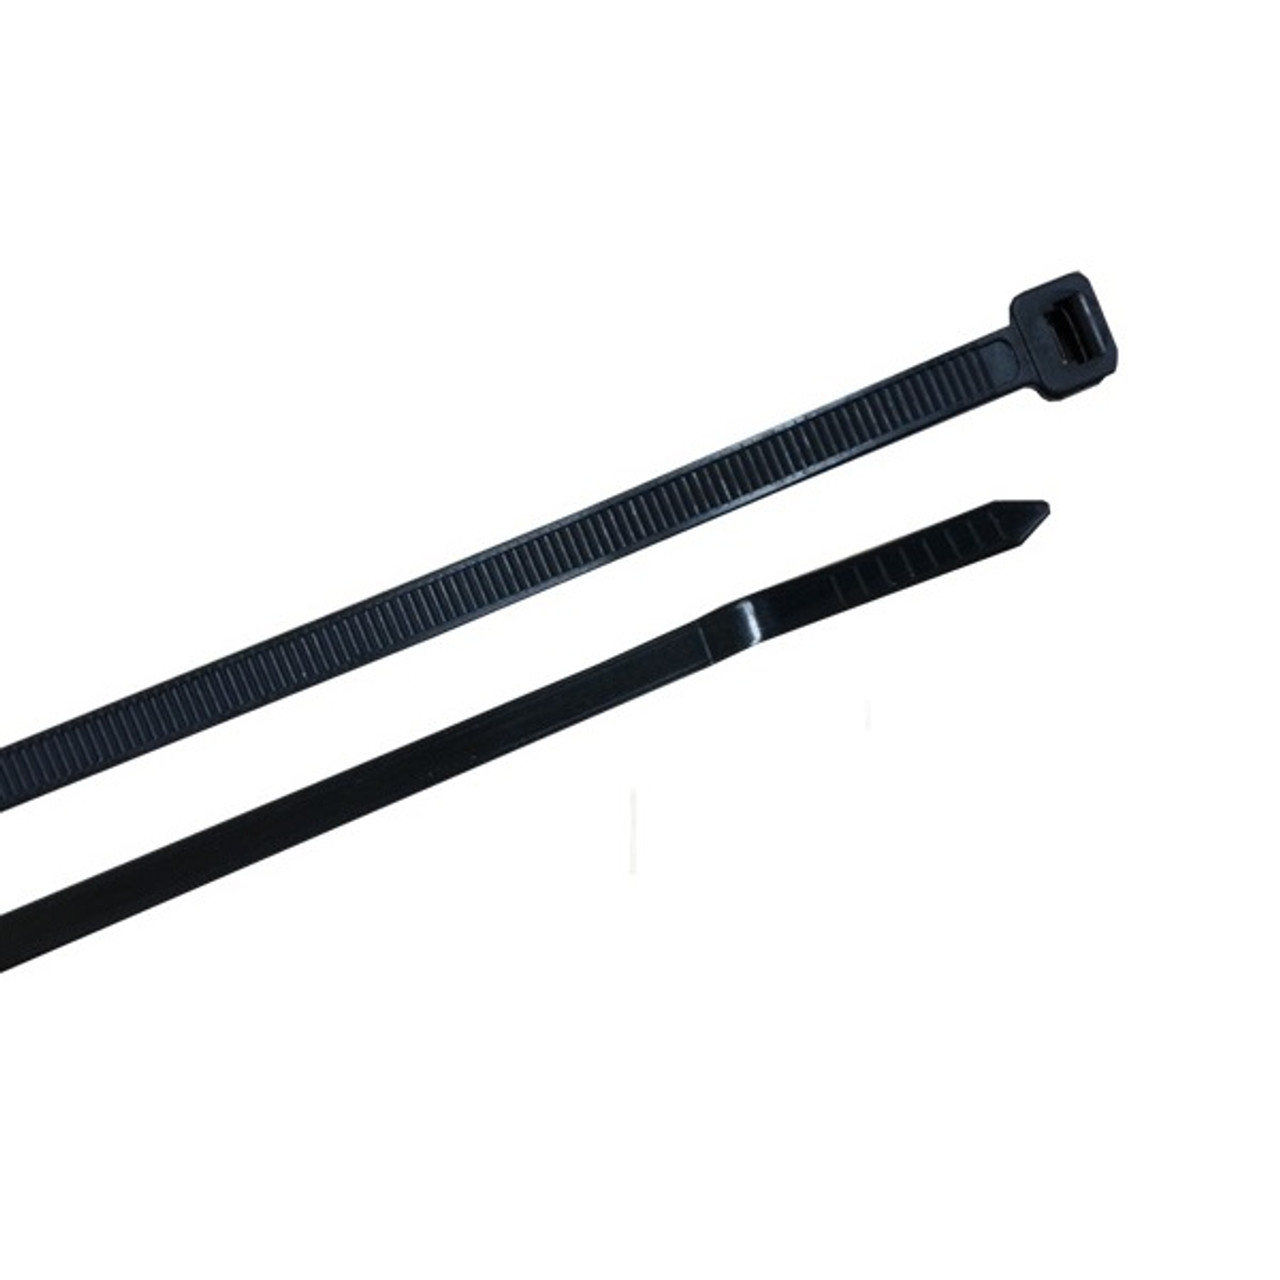 Stanley 4-Inch Multi-Purpose Cable Ties - Black (Pack of 100)